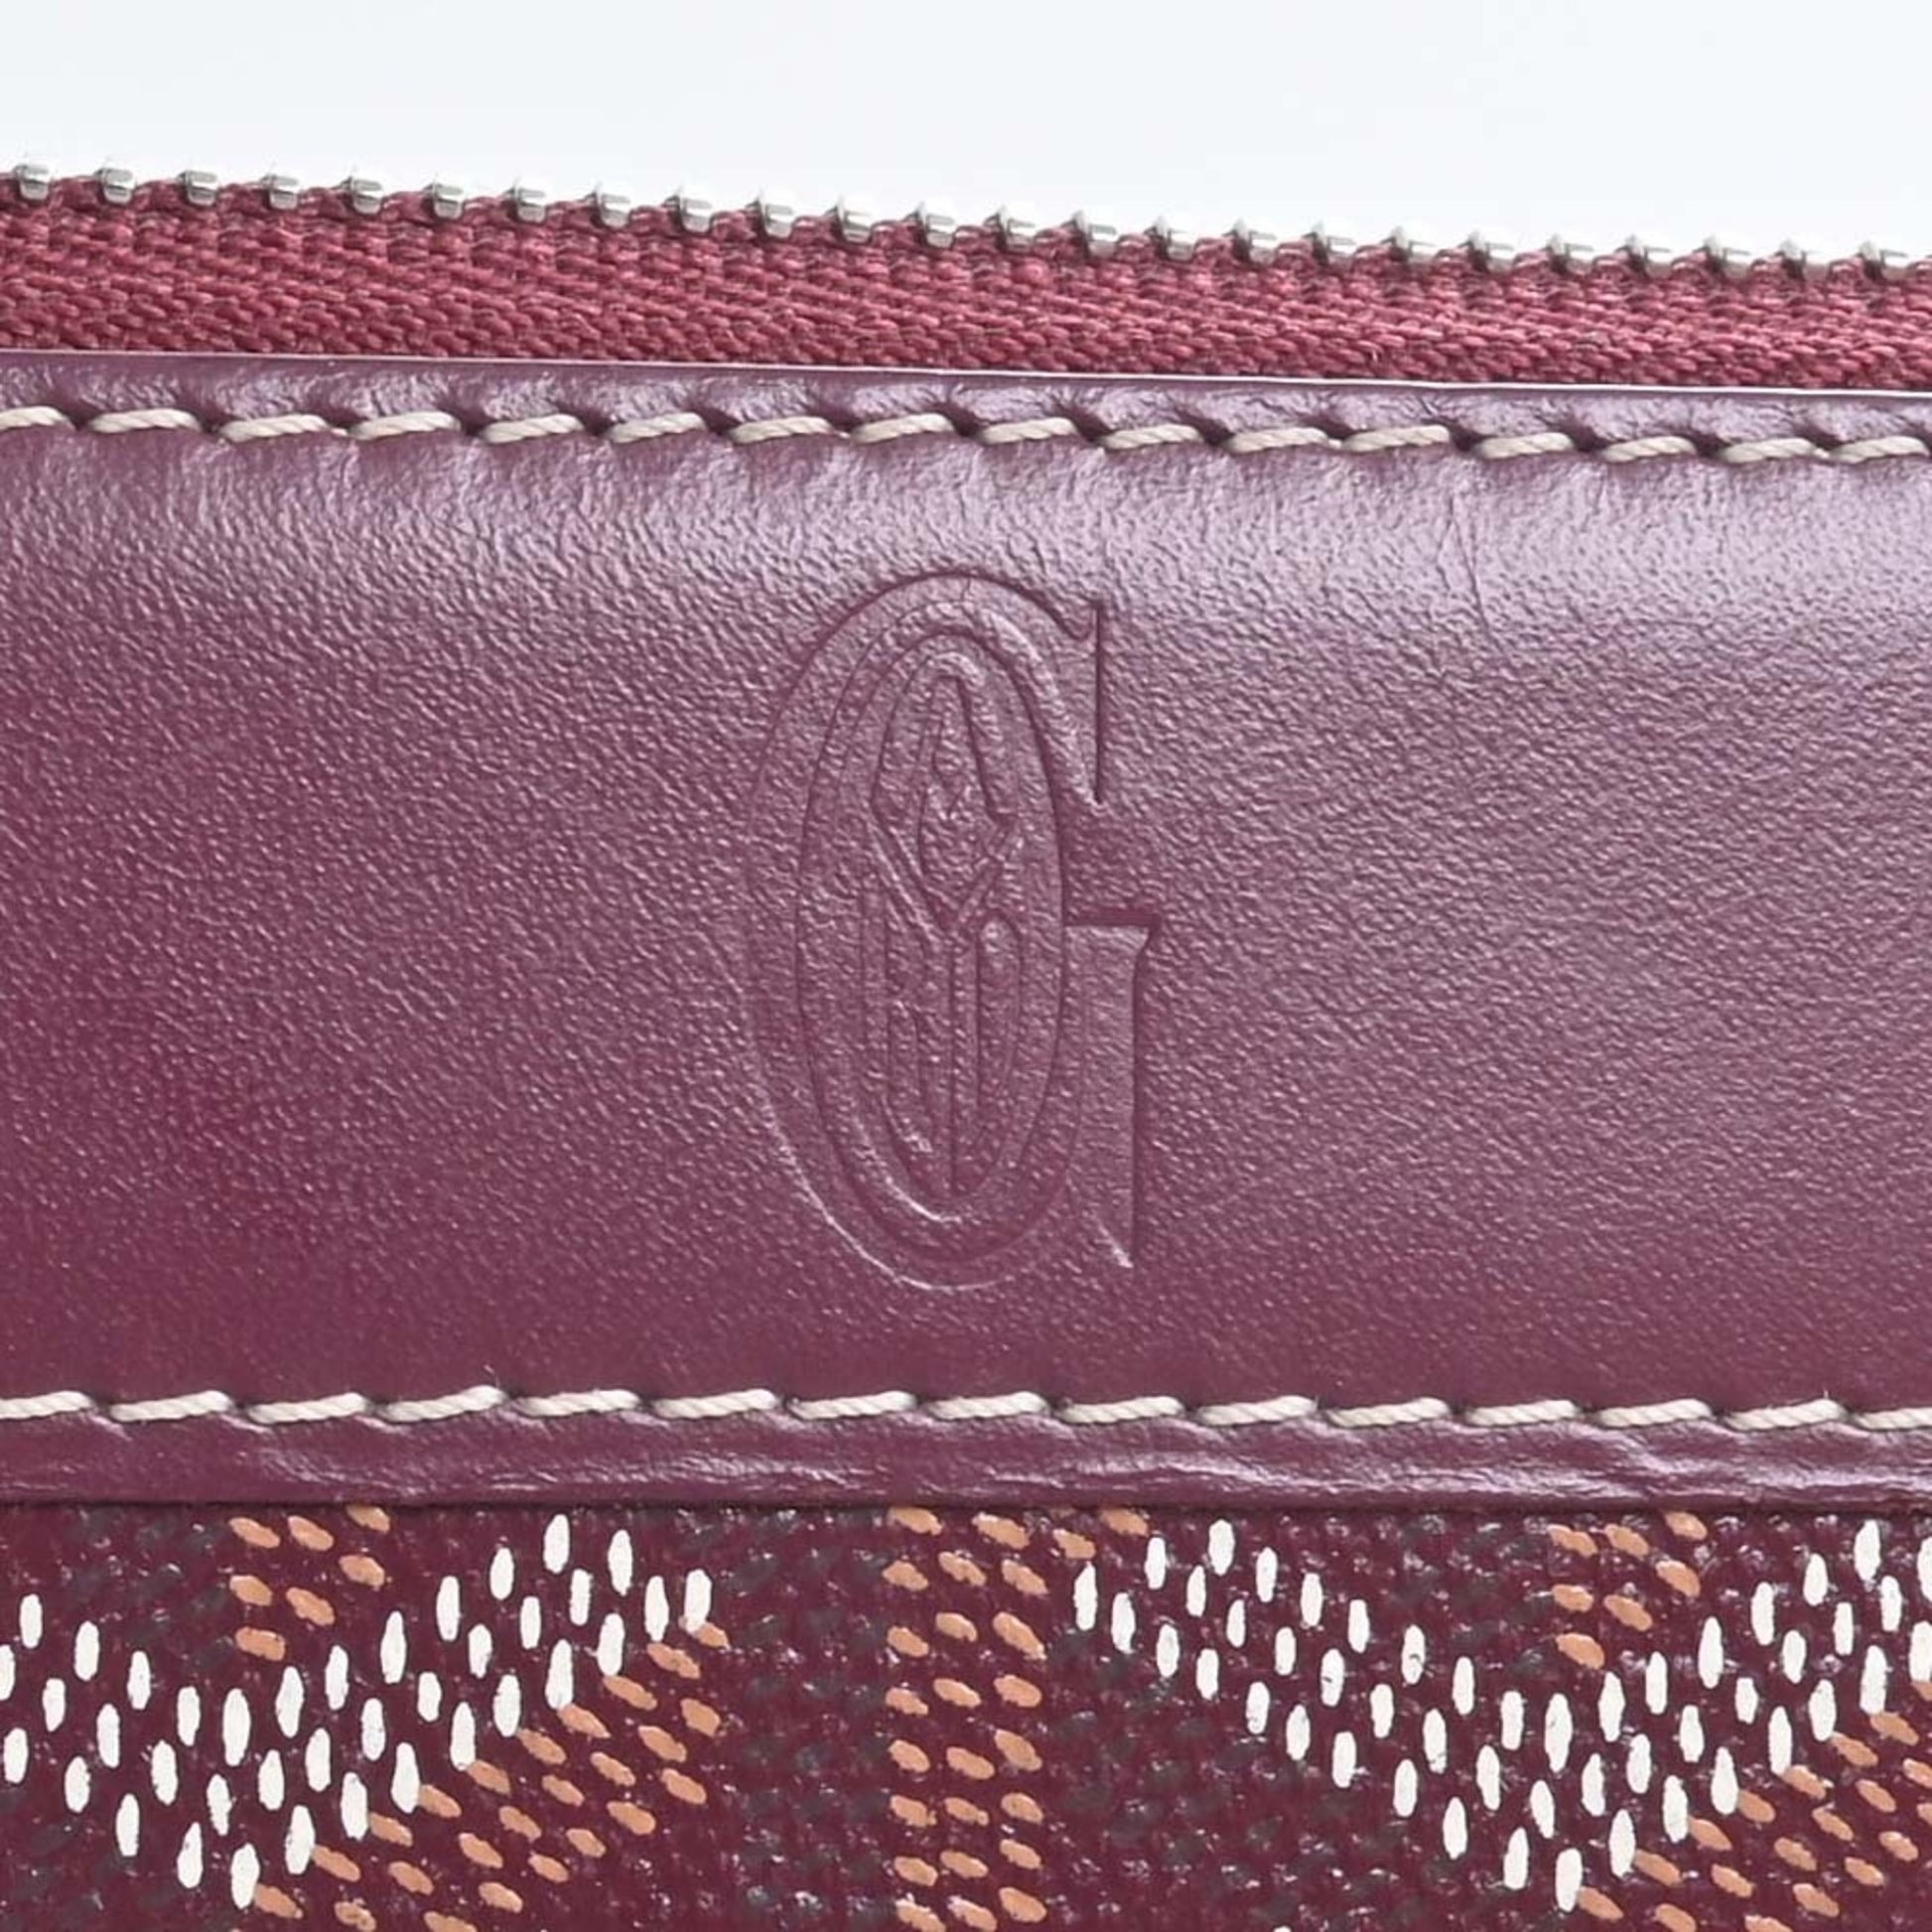 Leather wallet Goyard Burgundy in Leather - 35350547